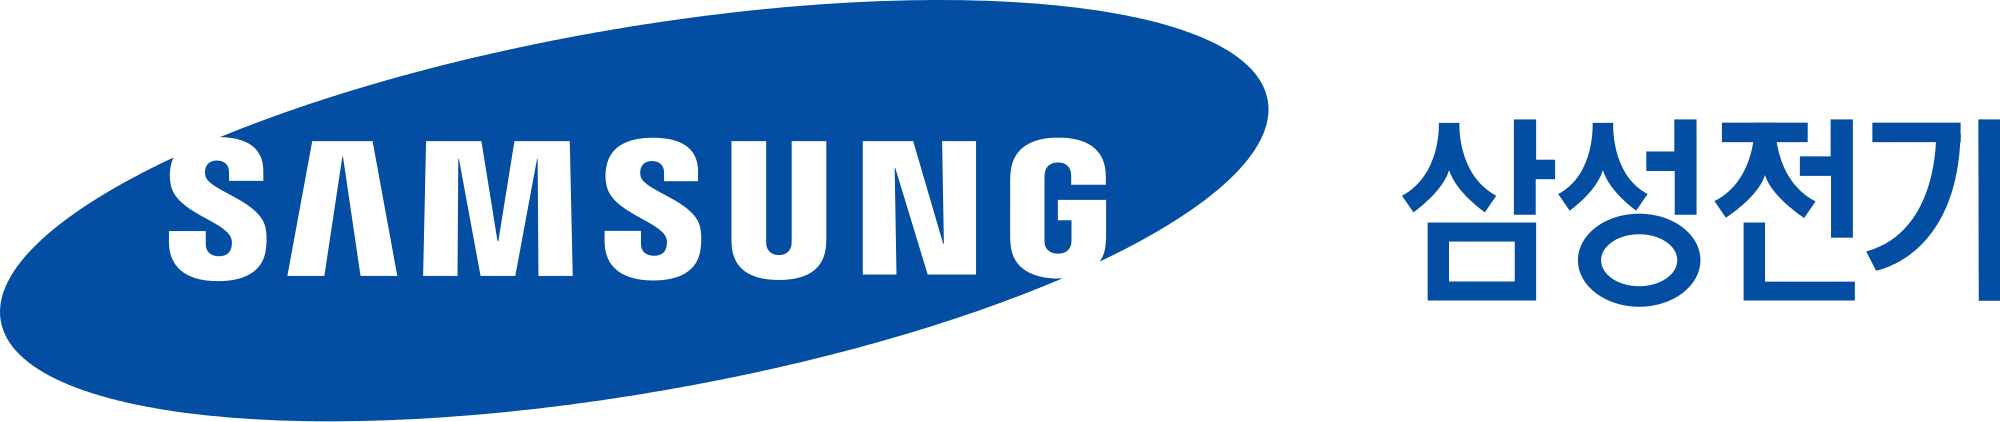 Samsung Logo Png - Samsung, Transparent background PNG HD thumbnail